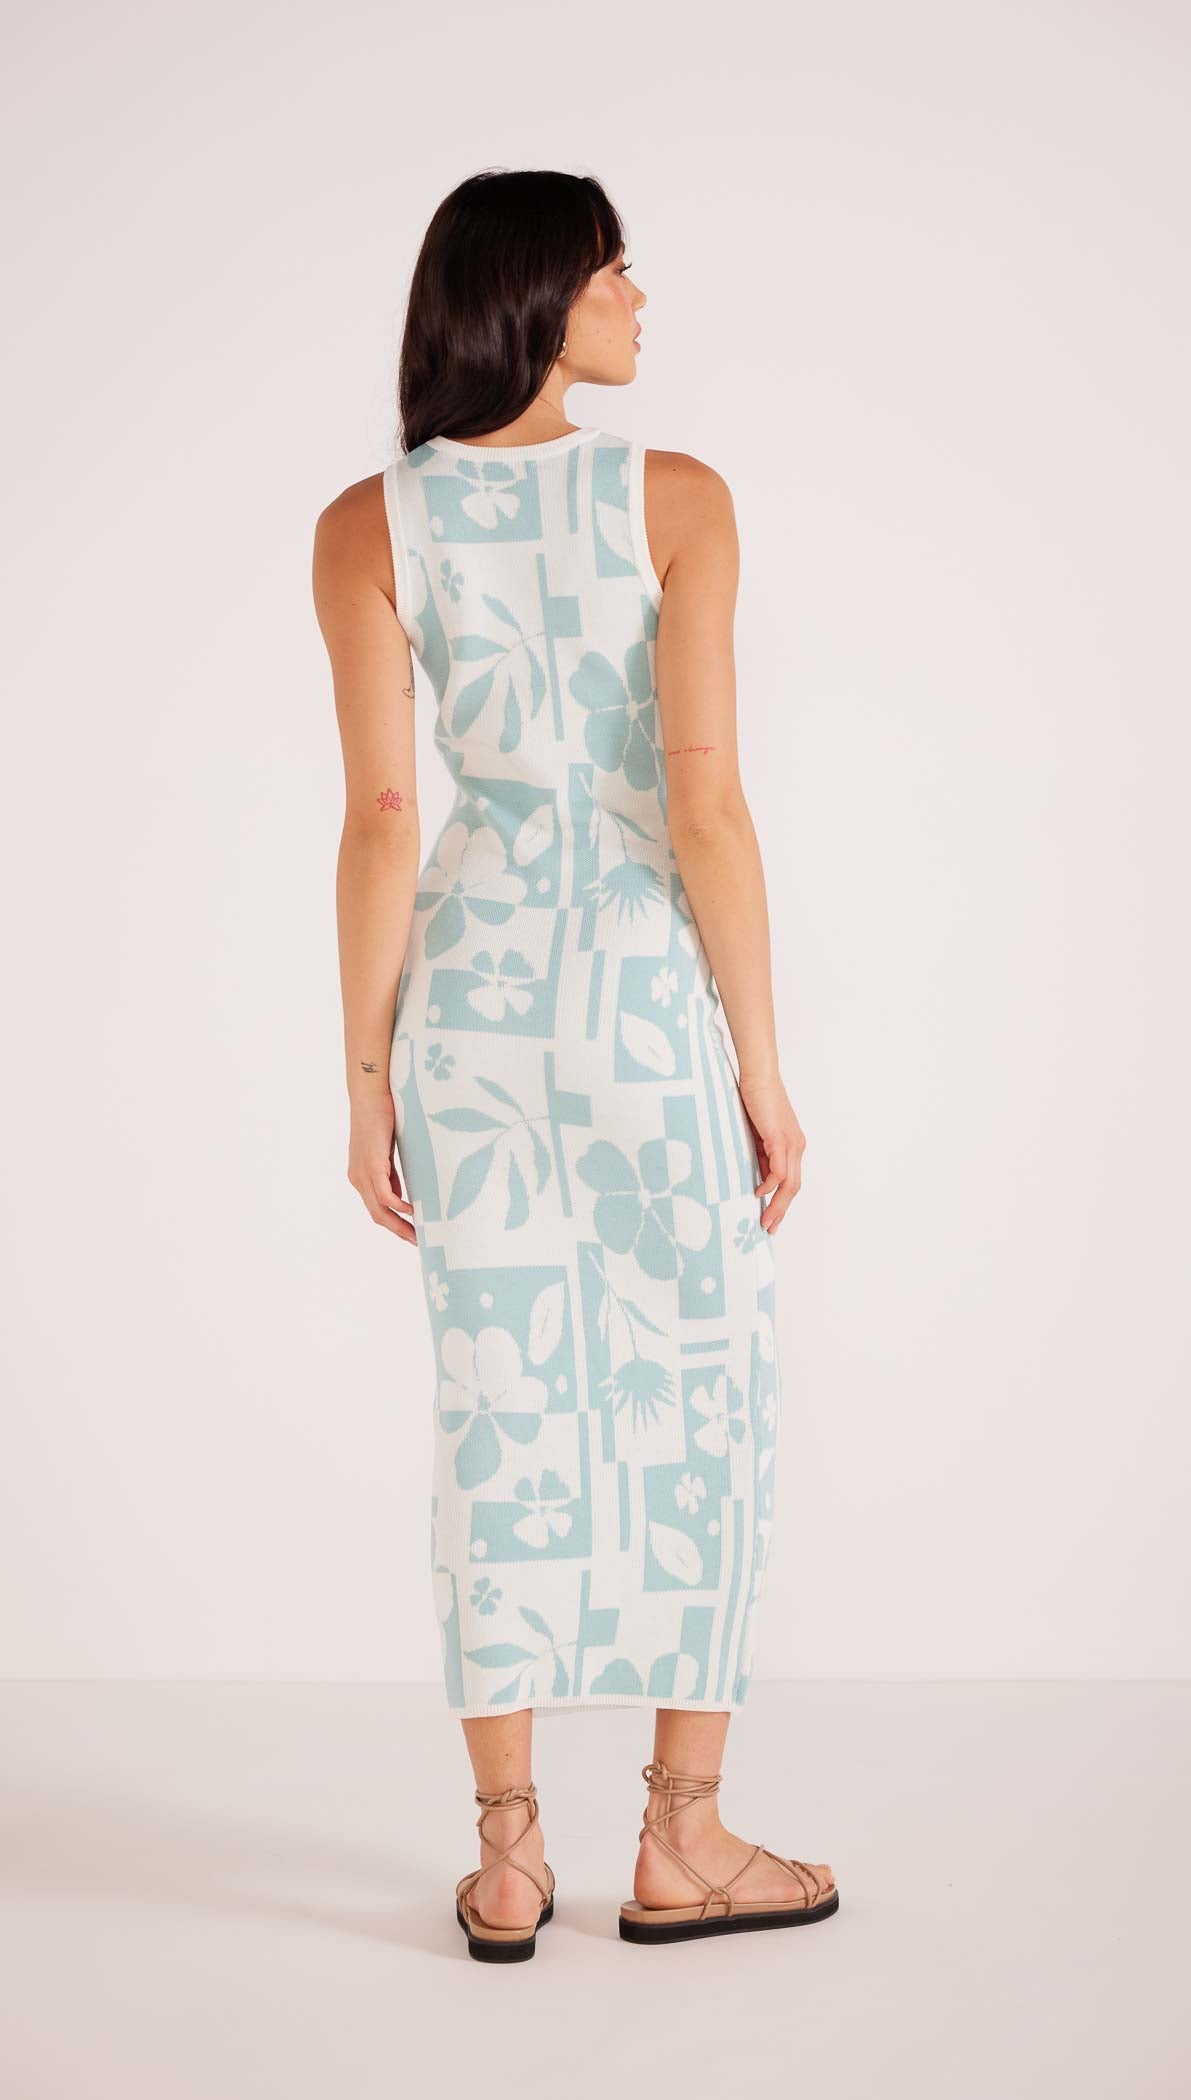 Lacy Intarsia Knit Midi Dress - White/Bluff